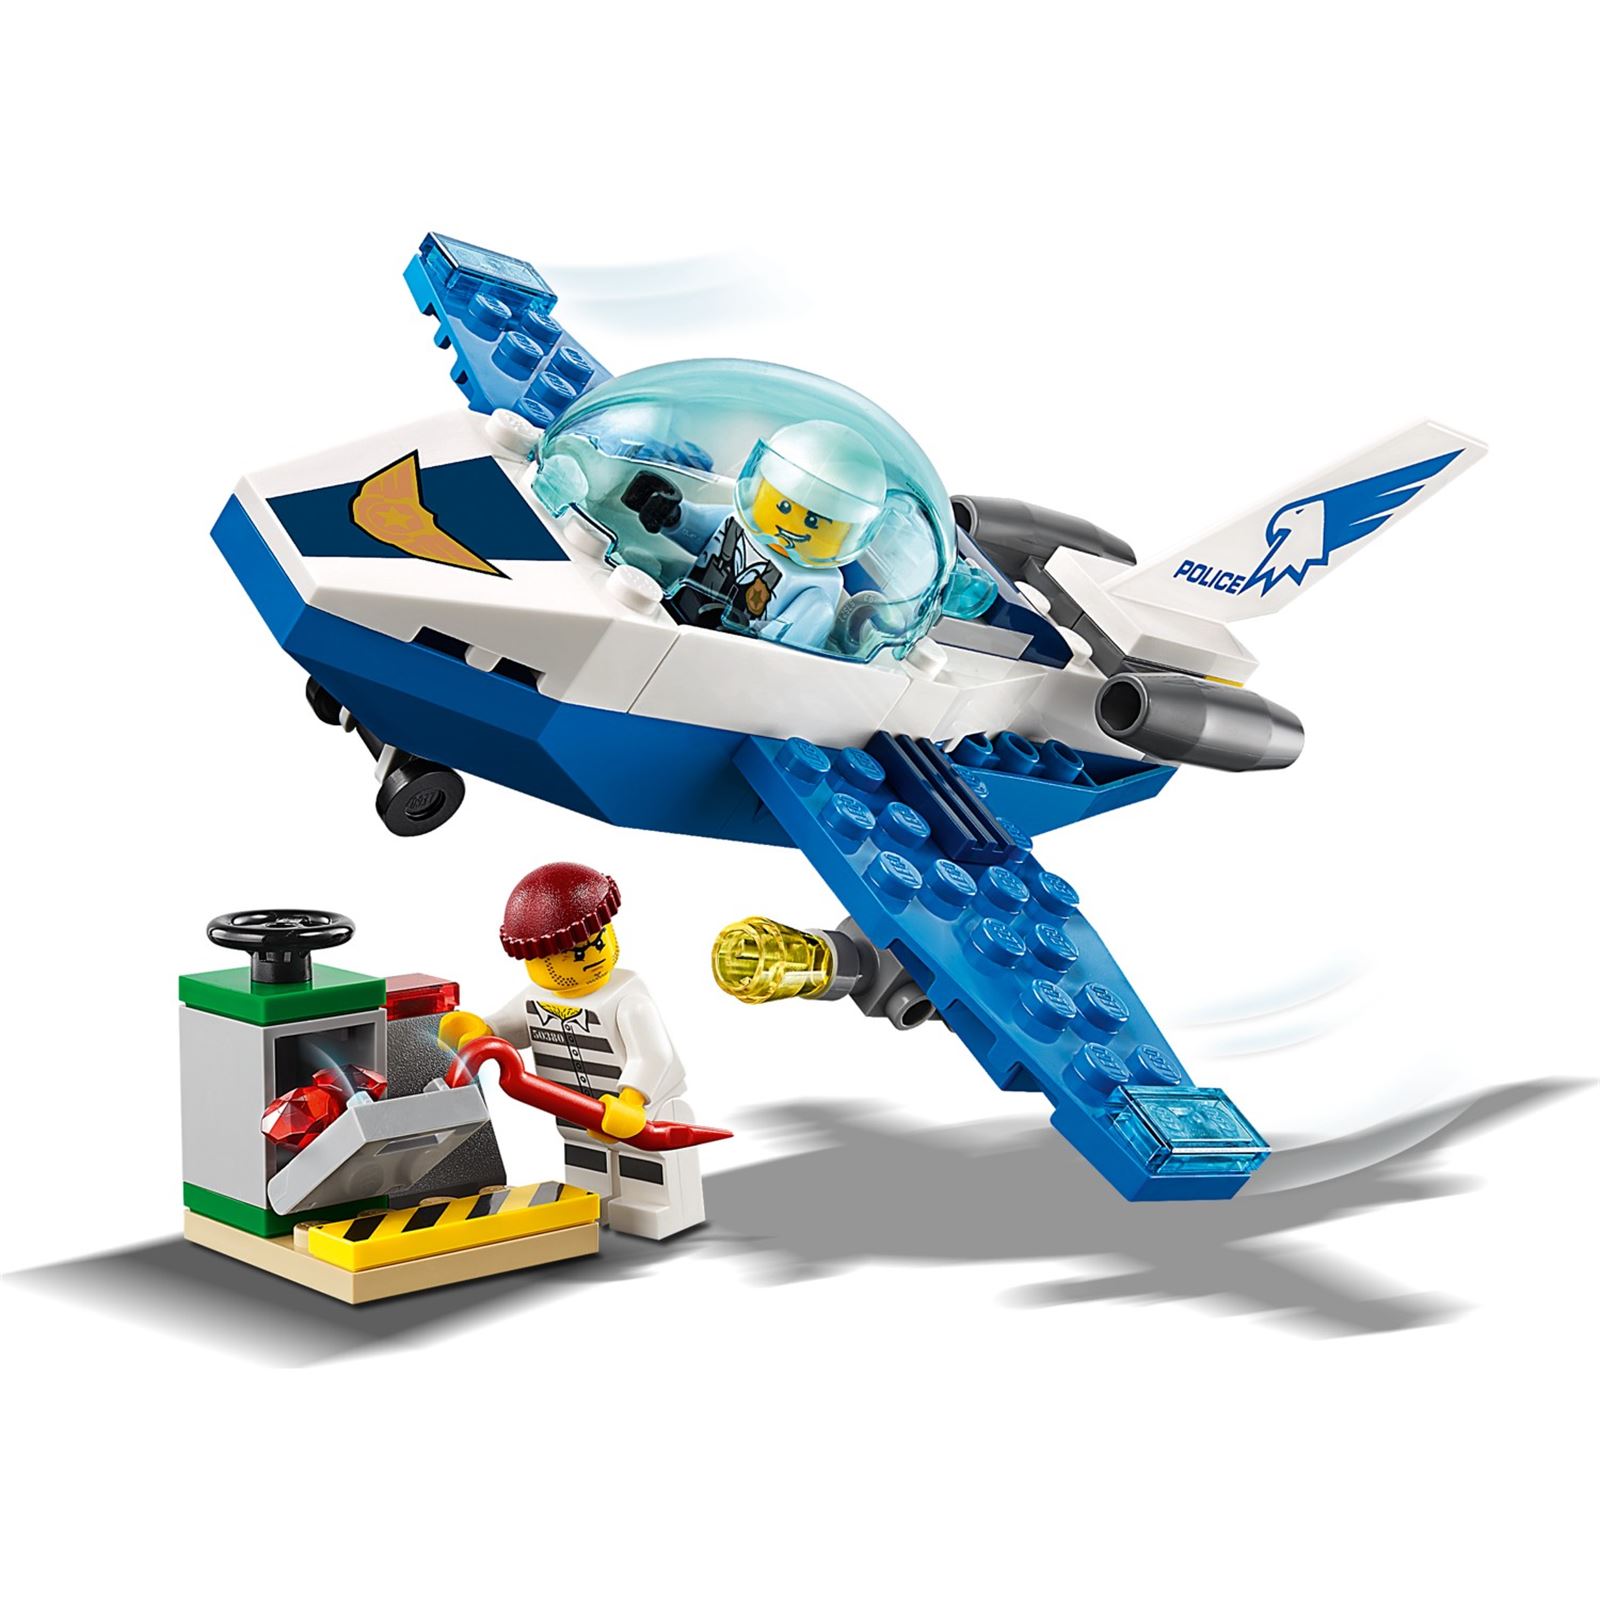 LEGO City Gökyüzü Polisi Jet Devriye 60206